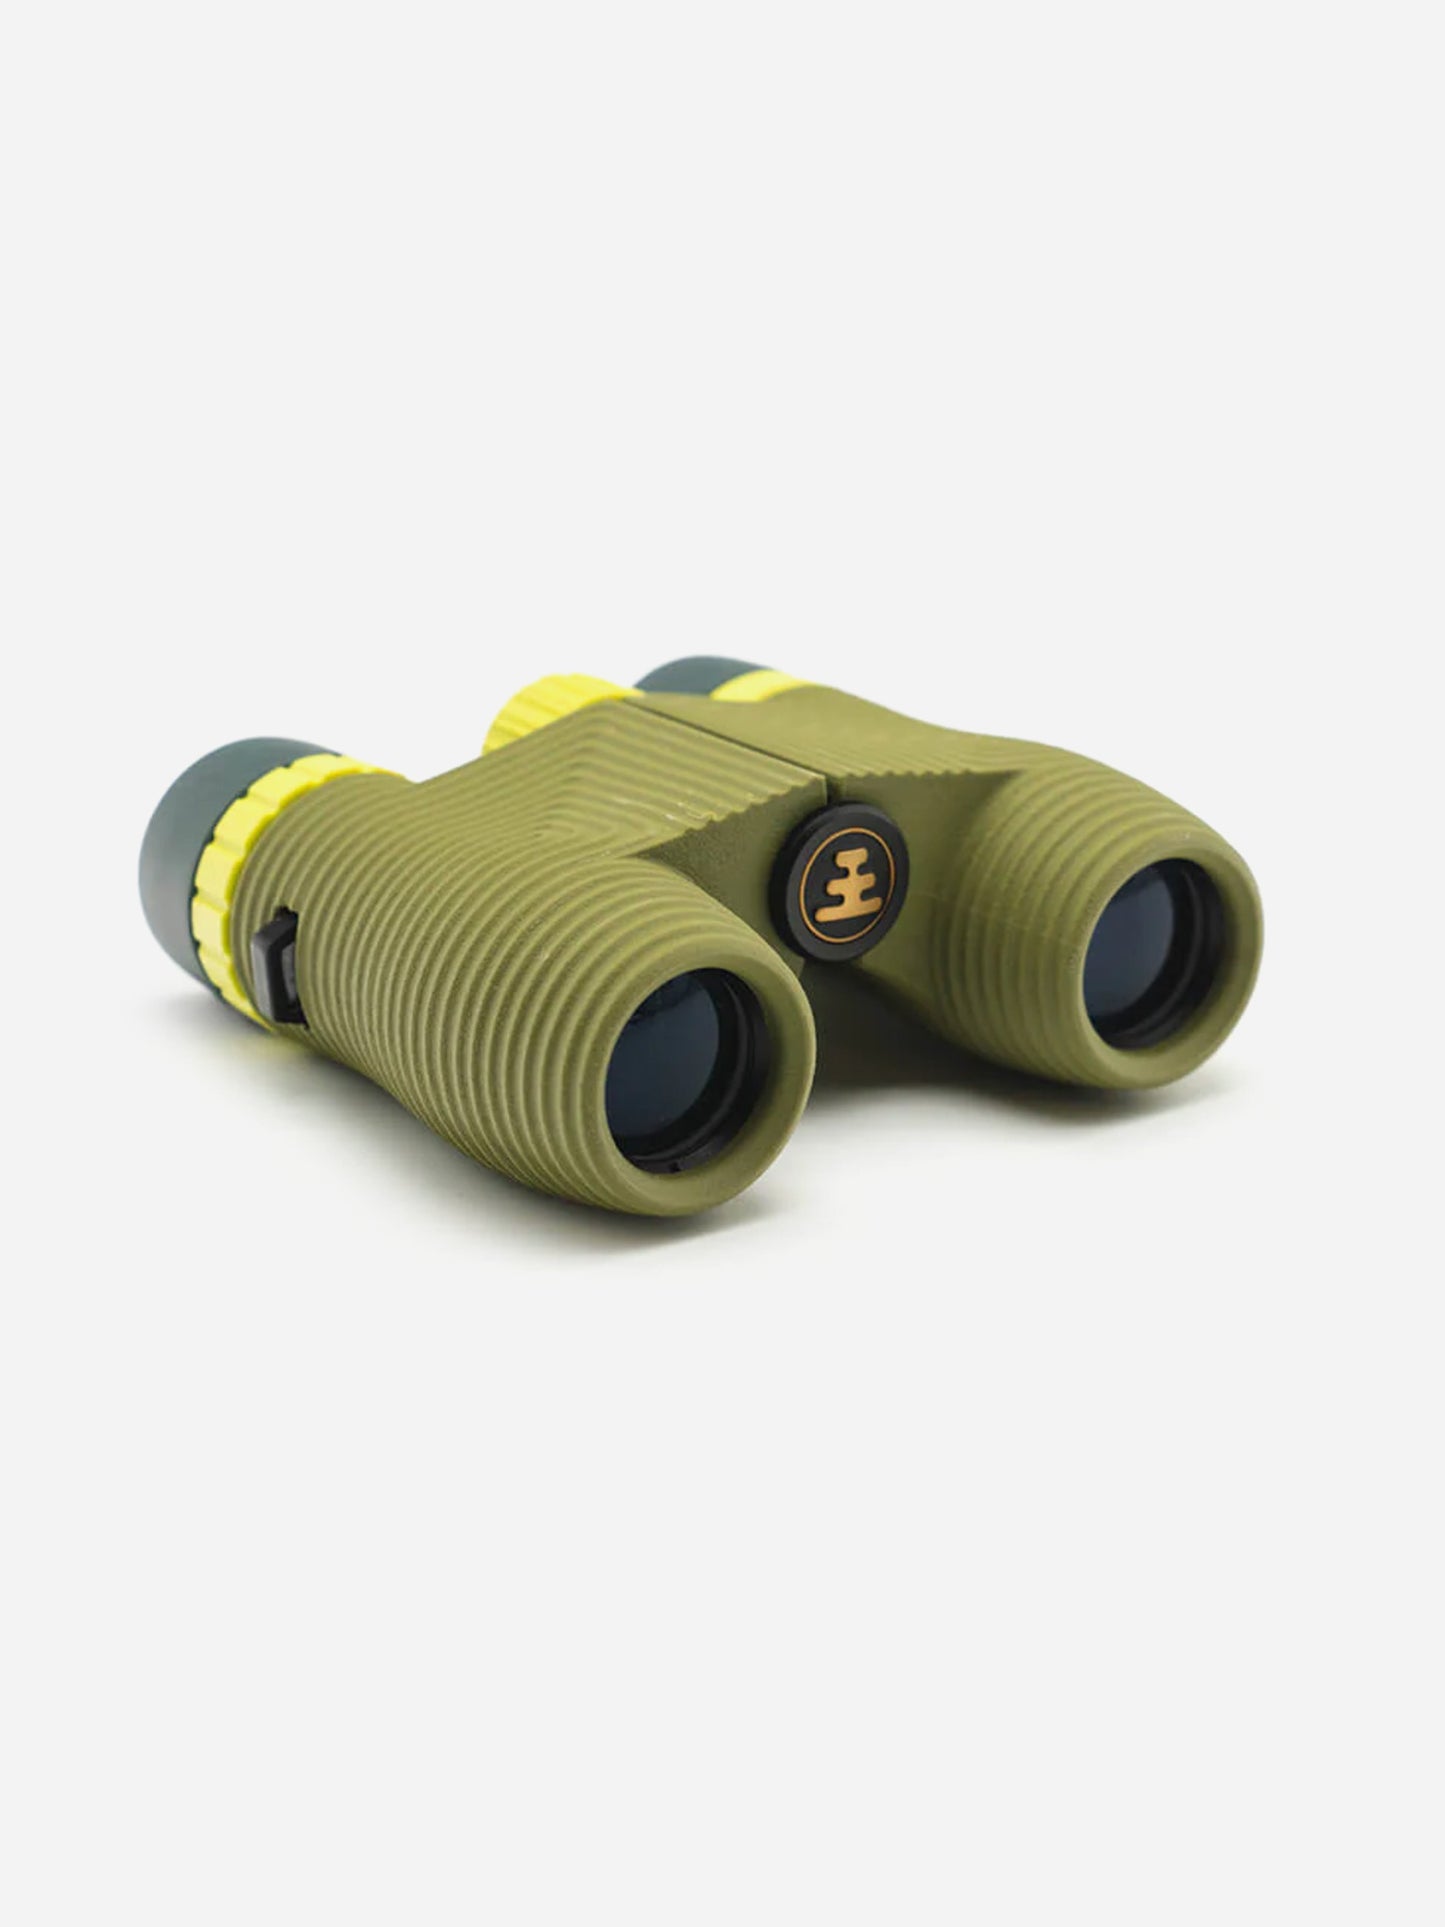 Nocs Provisions Standard Issue 10X Waterproof Binoculars